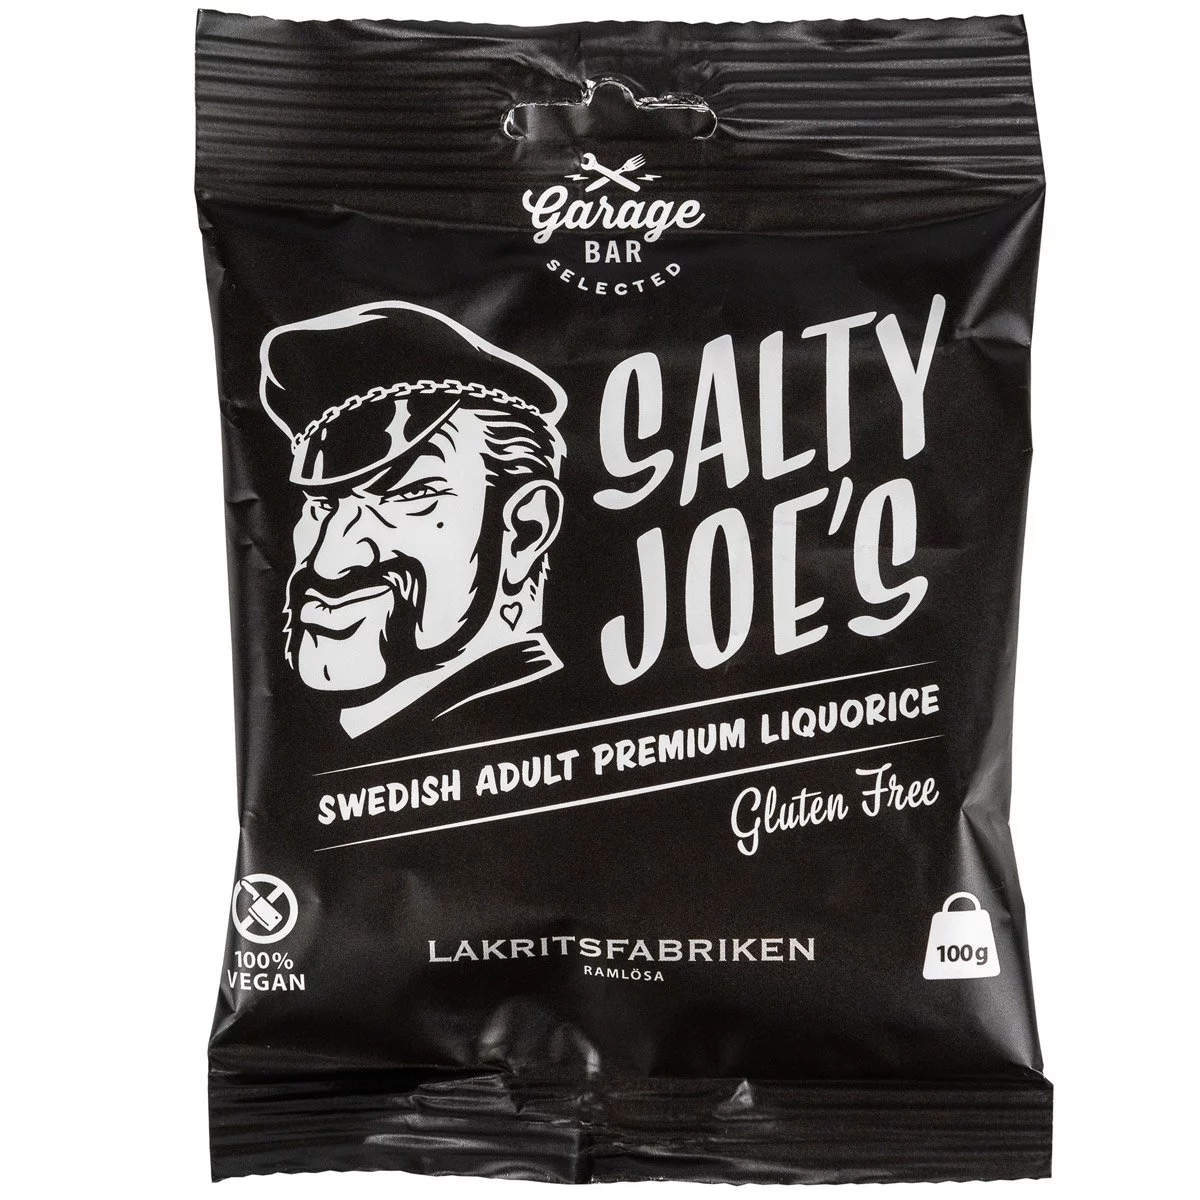 Lakritsfabriken Salty Joe's Lakritz / Vegan (100g) 1